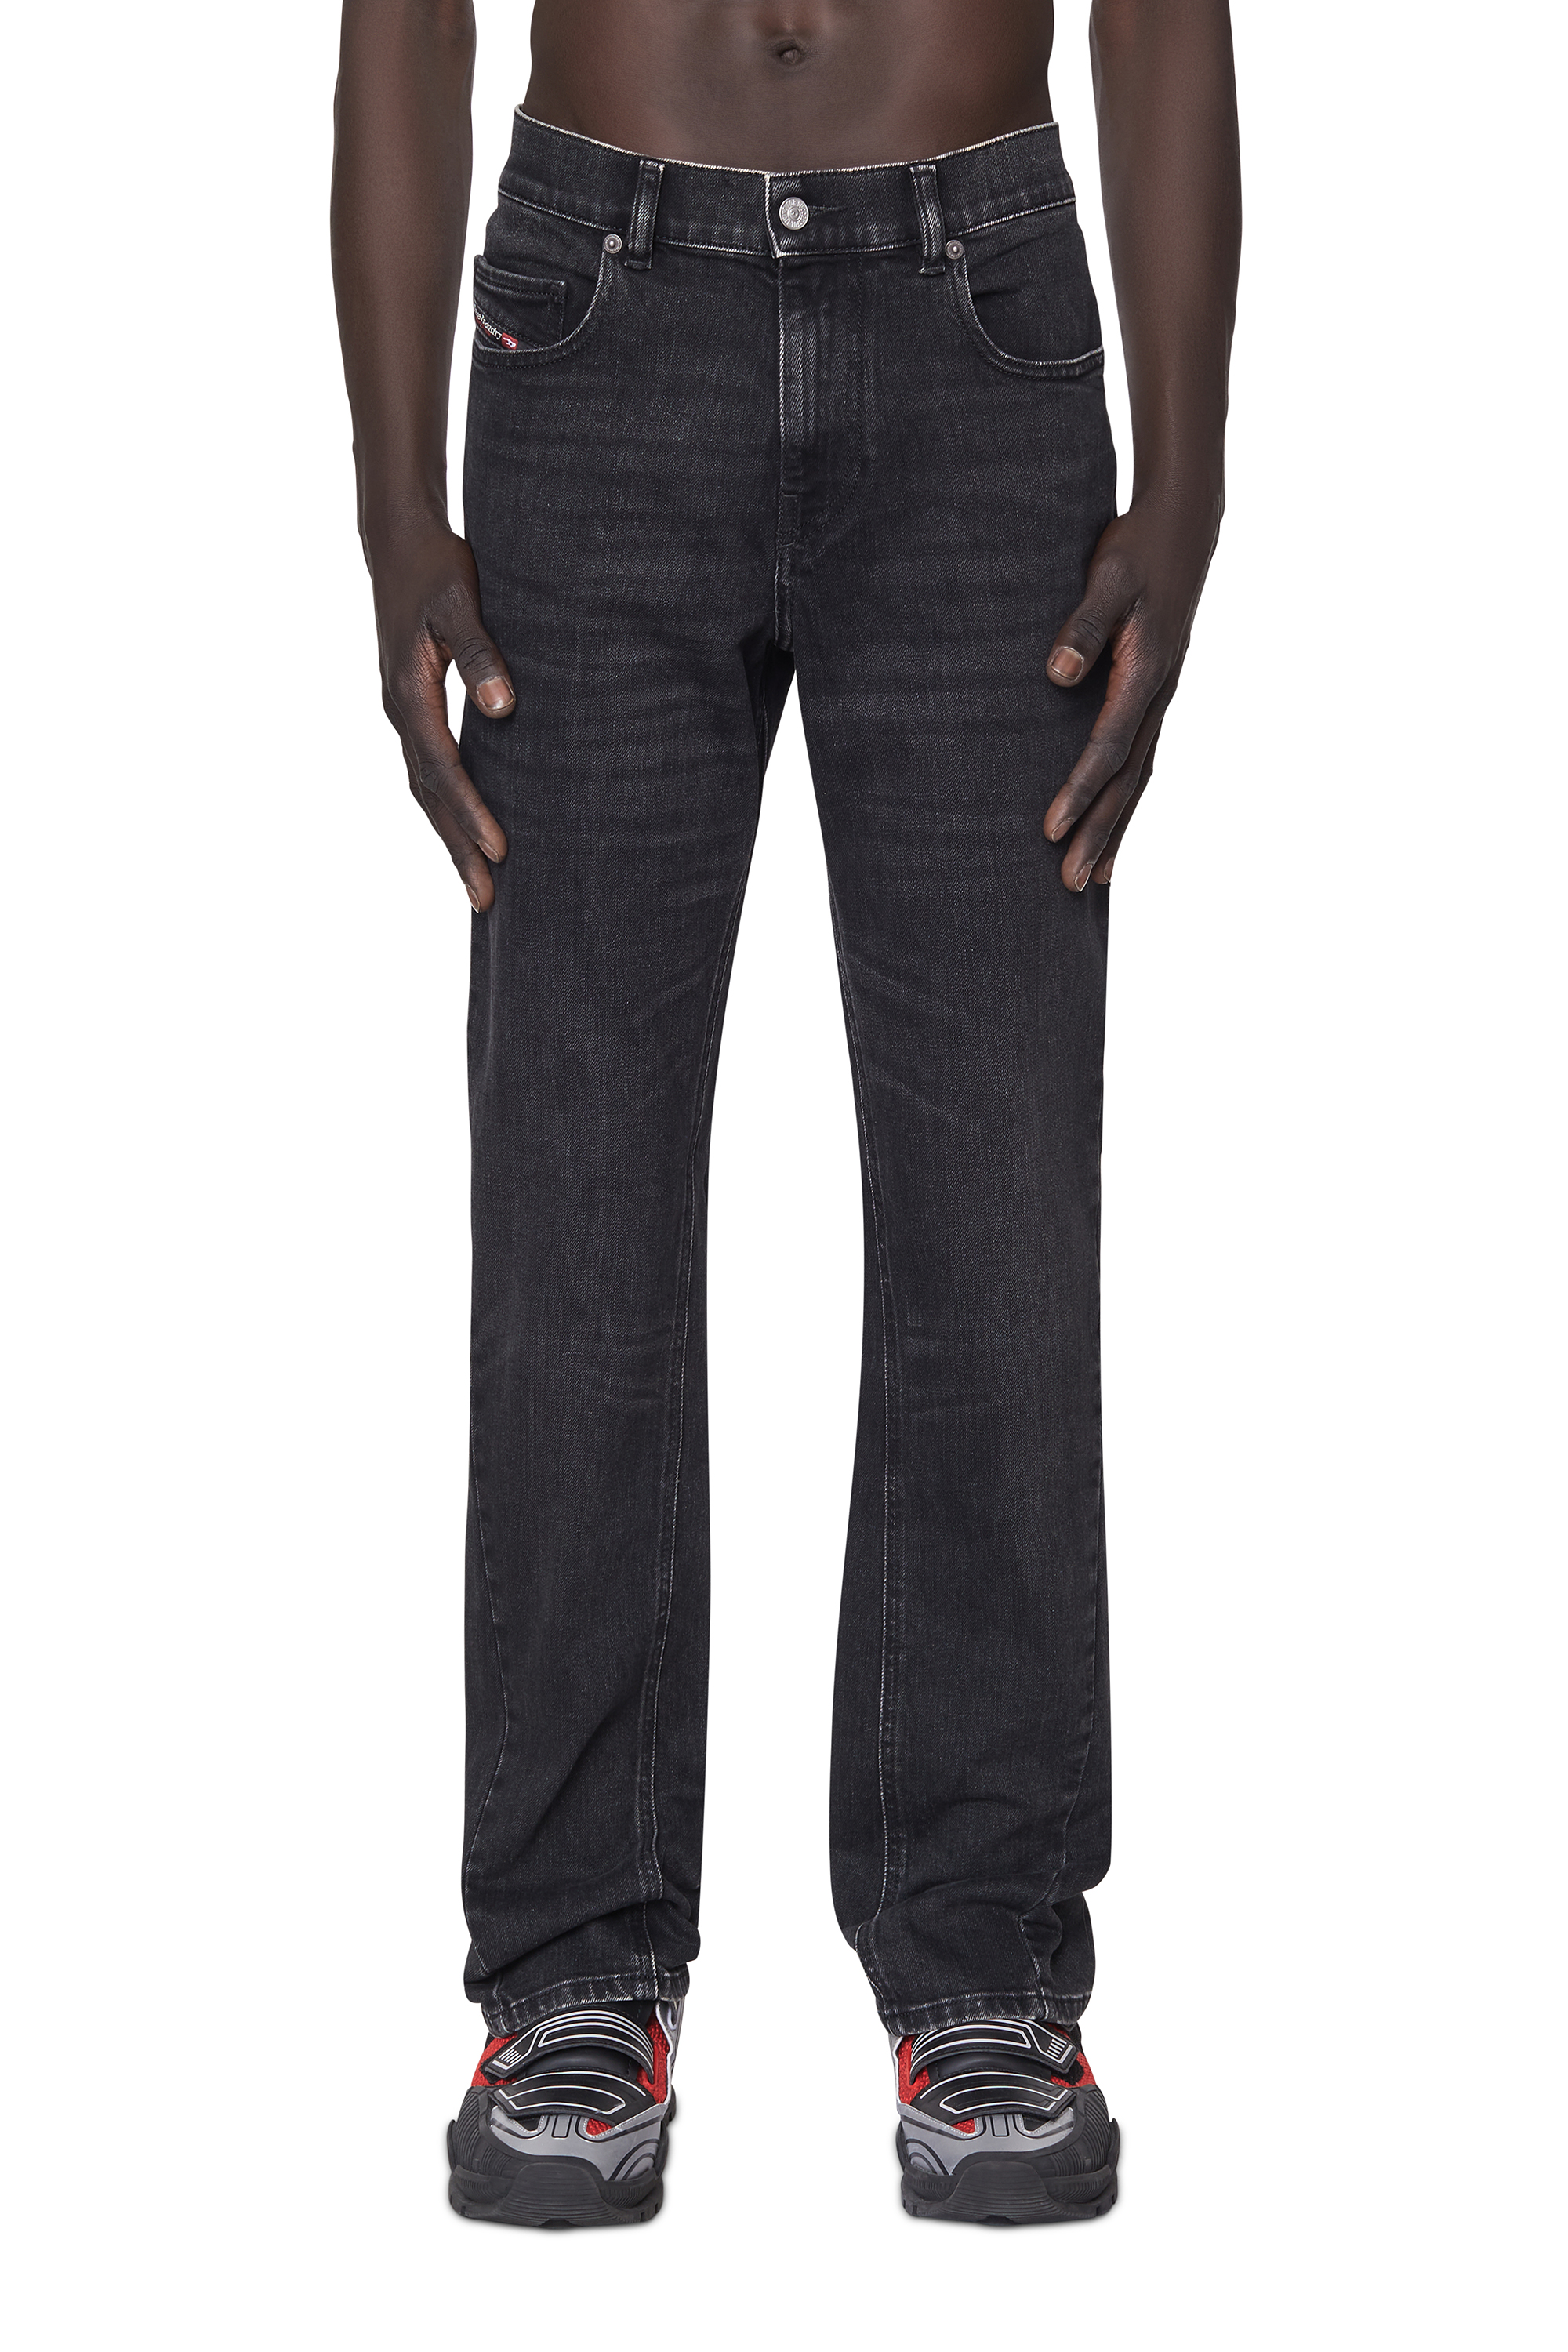 2021 D-VOCS 09B83 Bootcut Jeans, Black/Dark grey - Jeans